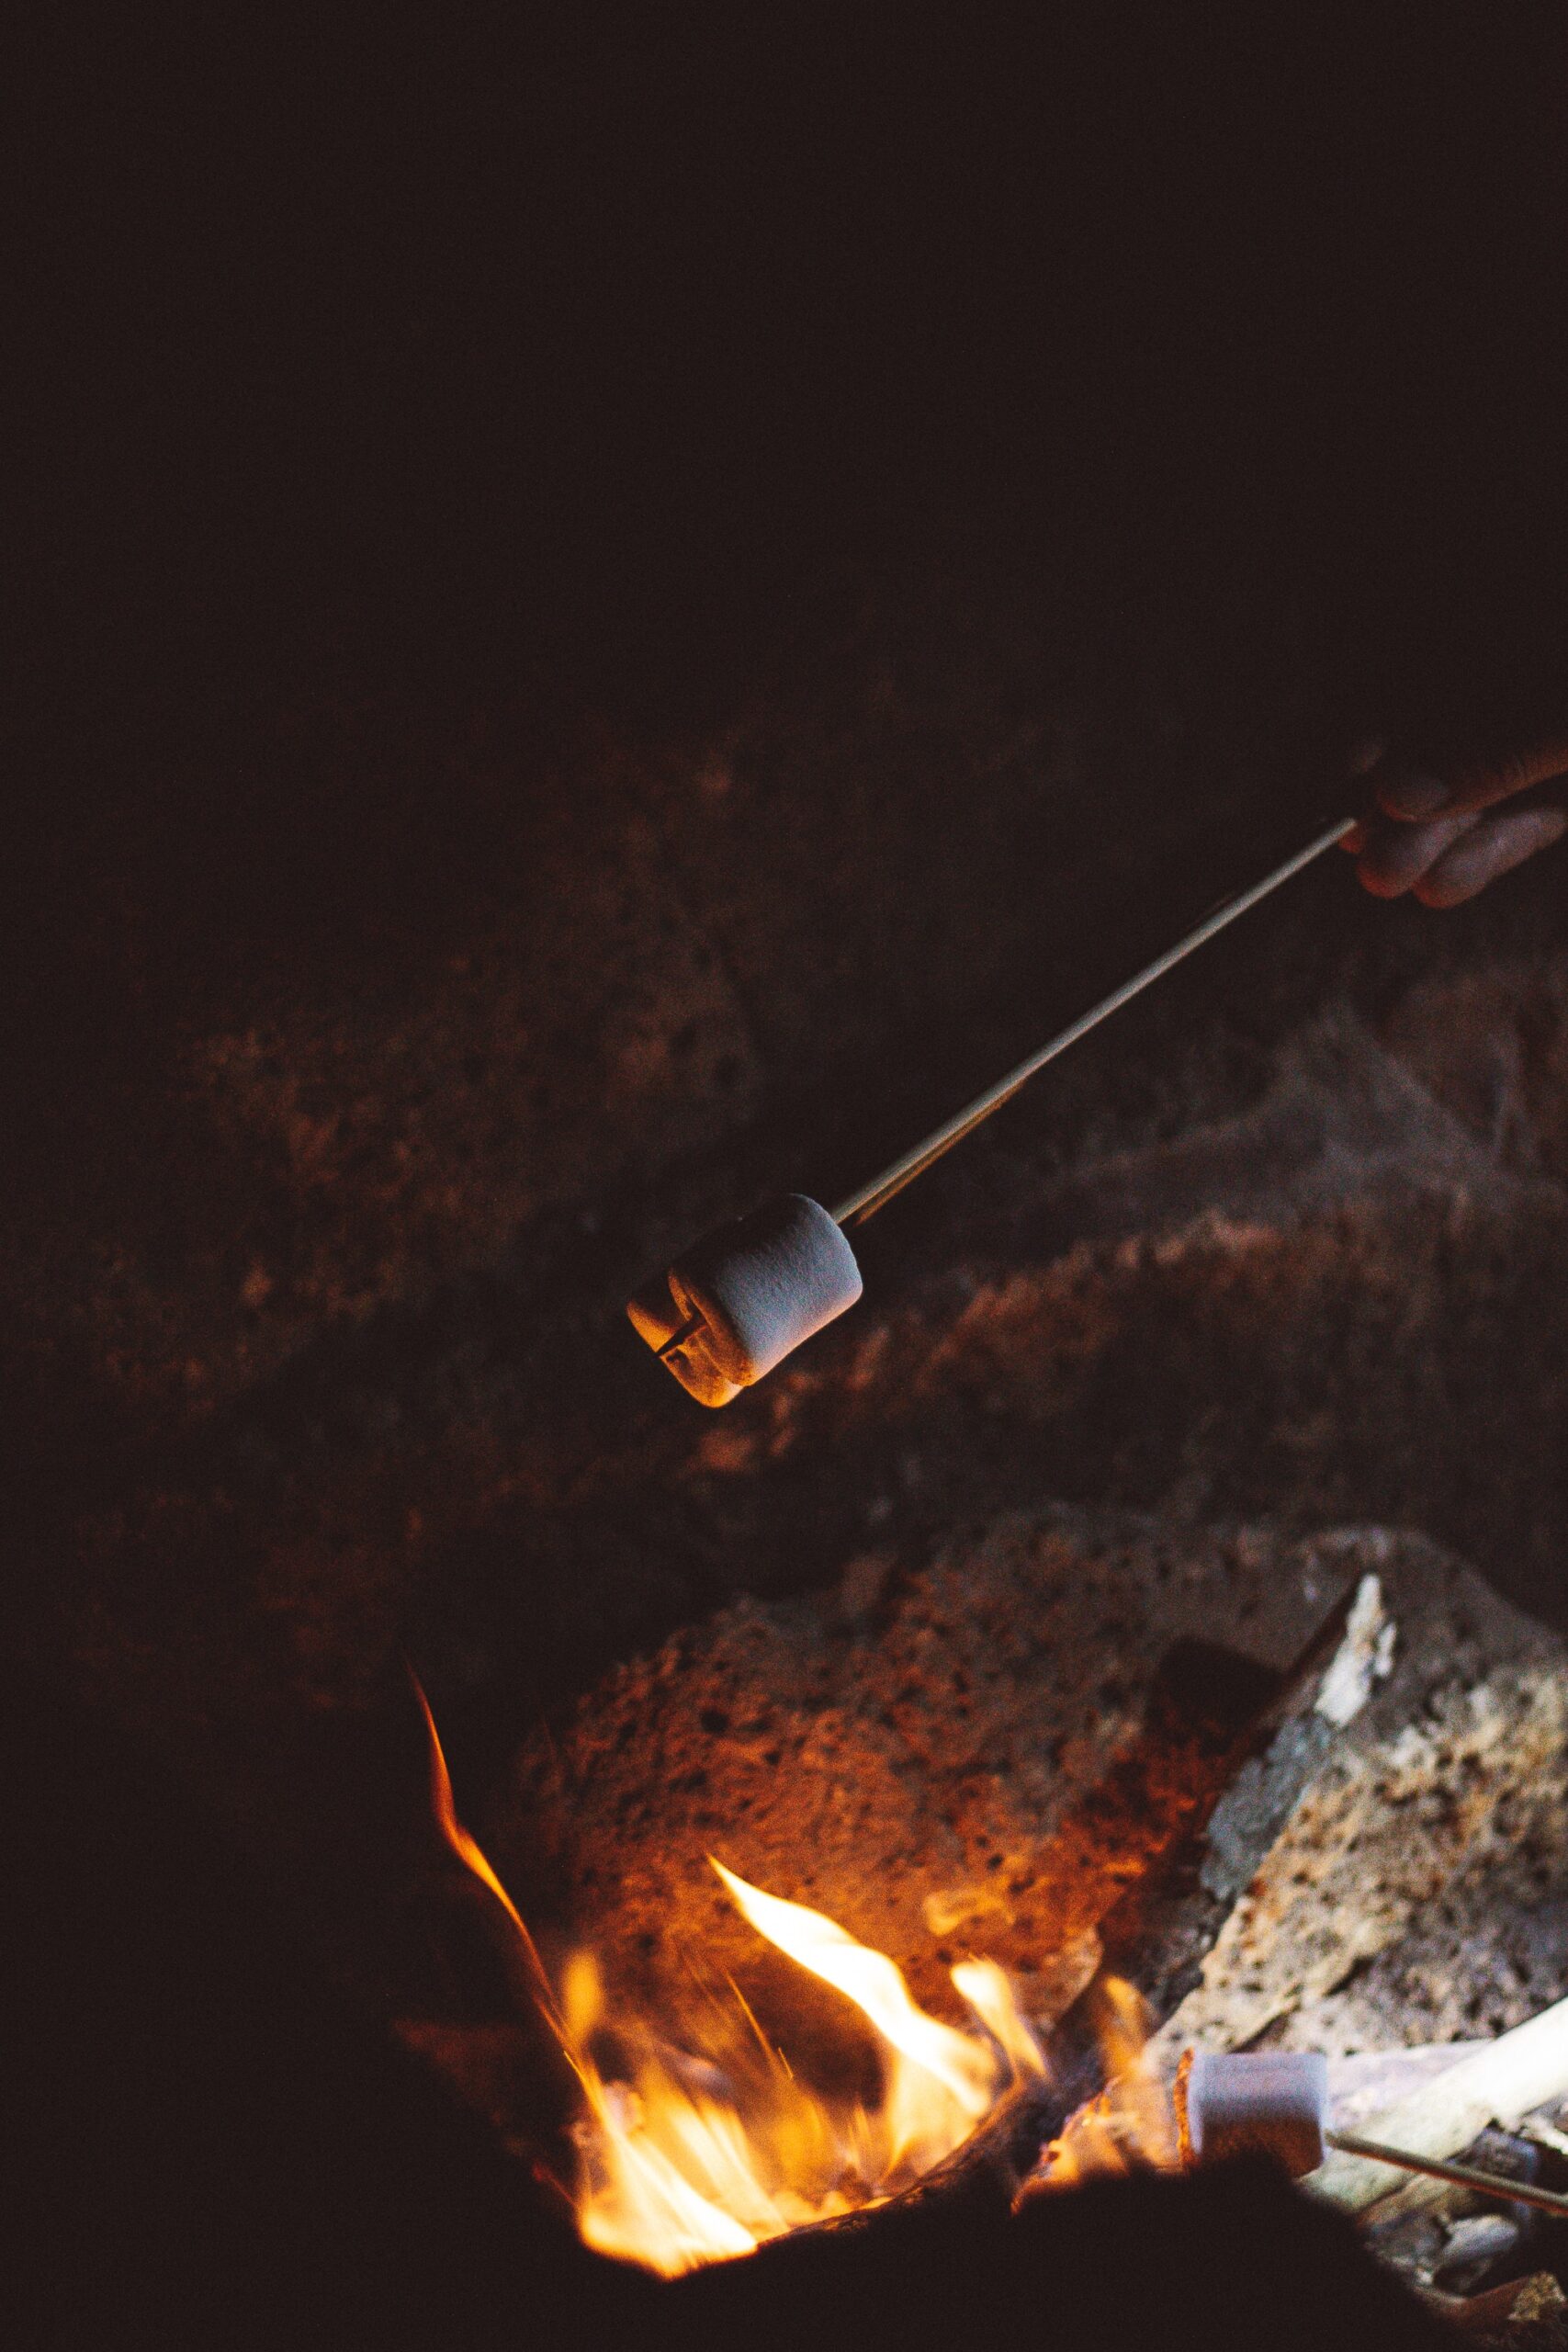 Roasting marshmallows over fire, tasty bonfire foods.